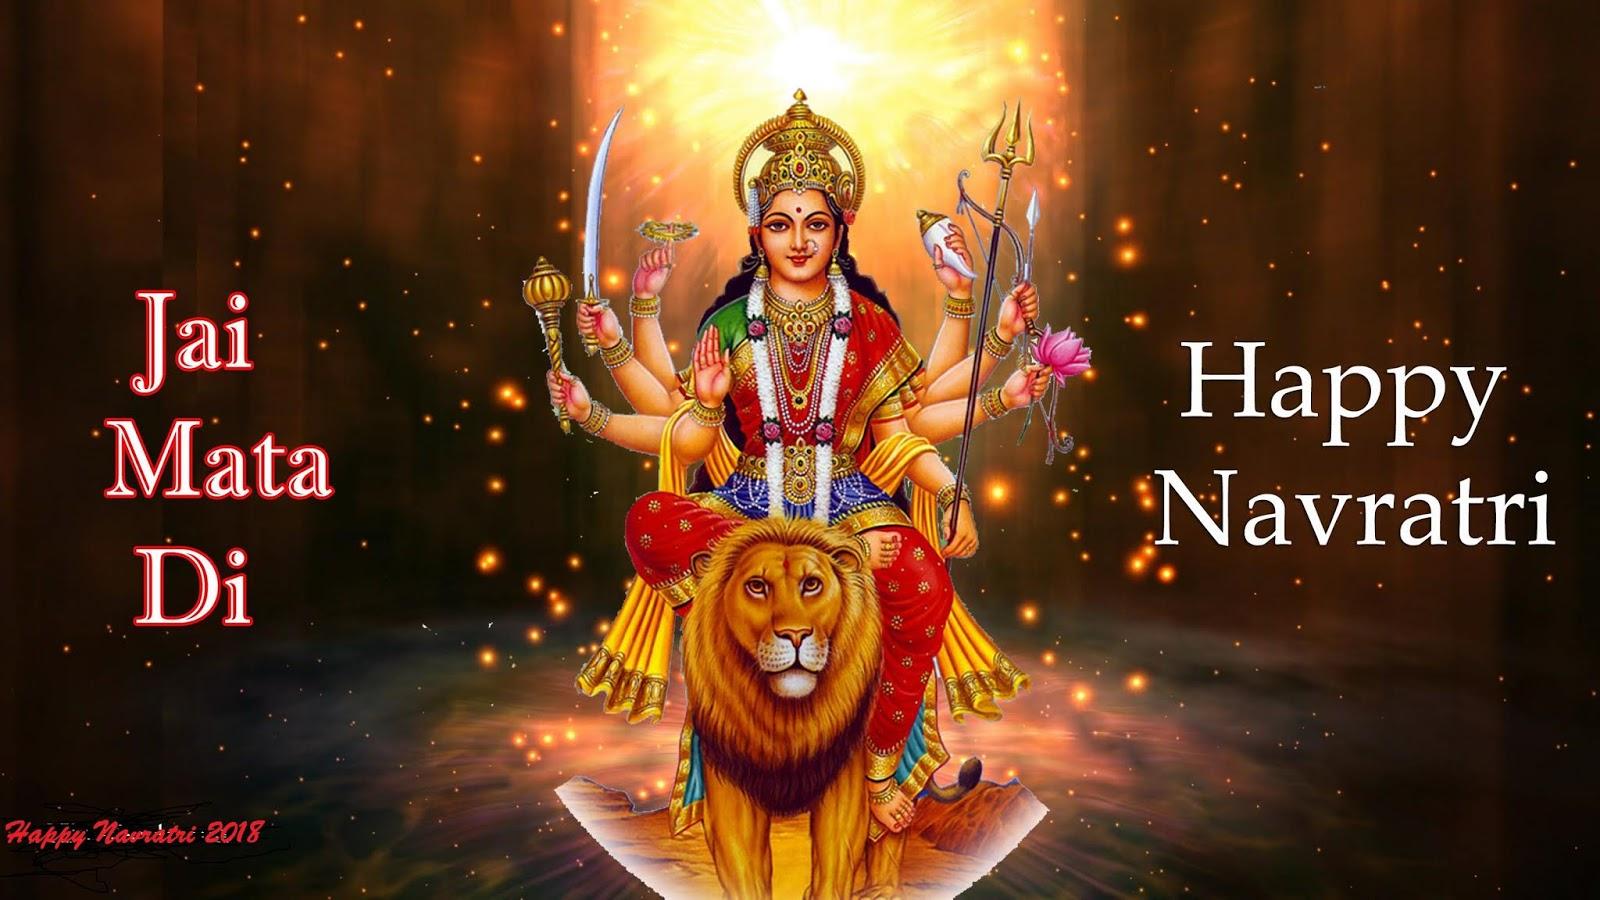 Happy Navratri Image photo wallpaper for whatsapp HD 2018 Happy